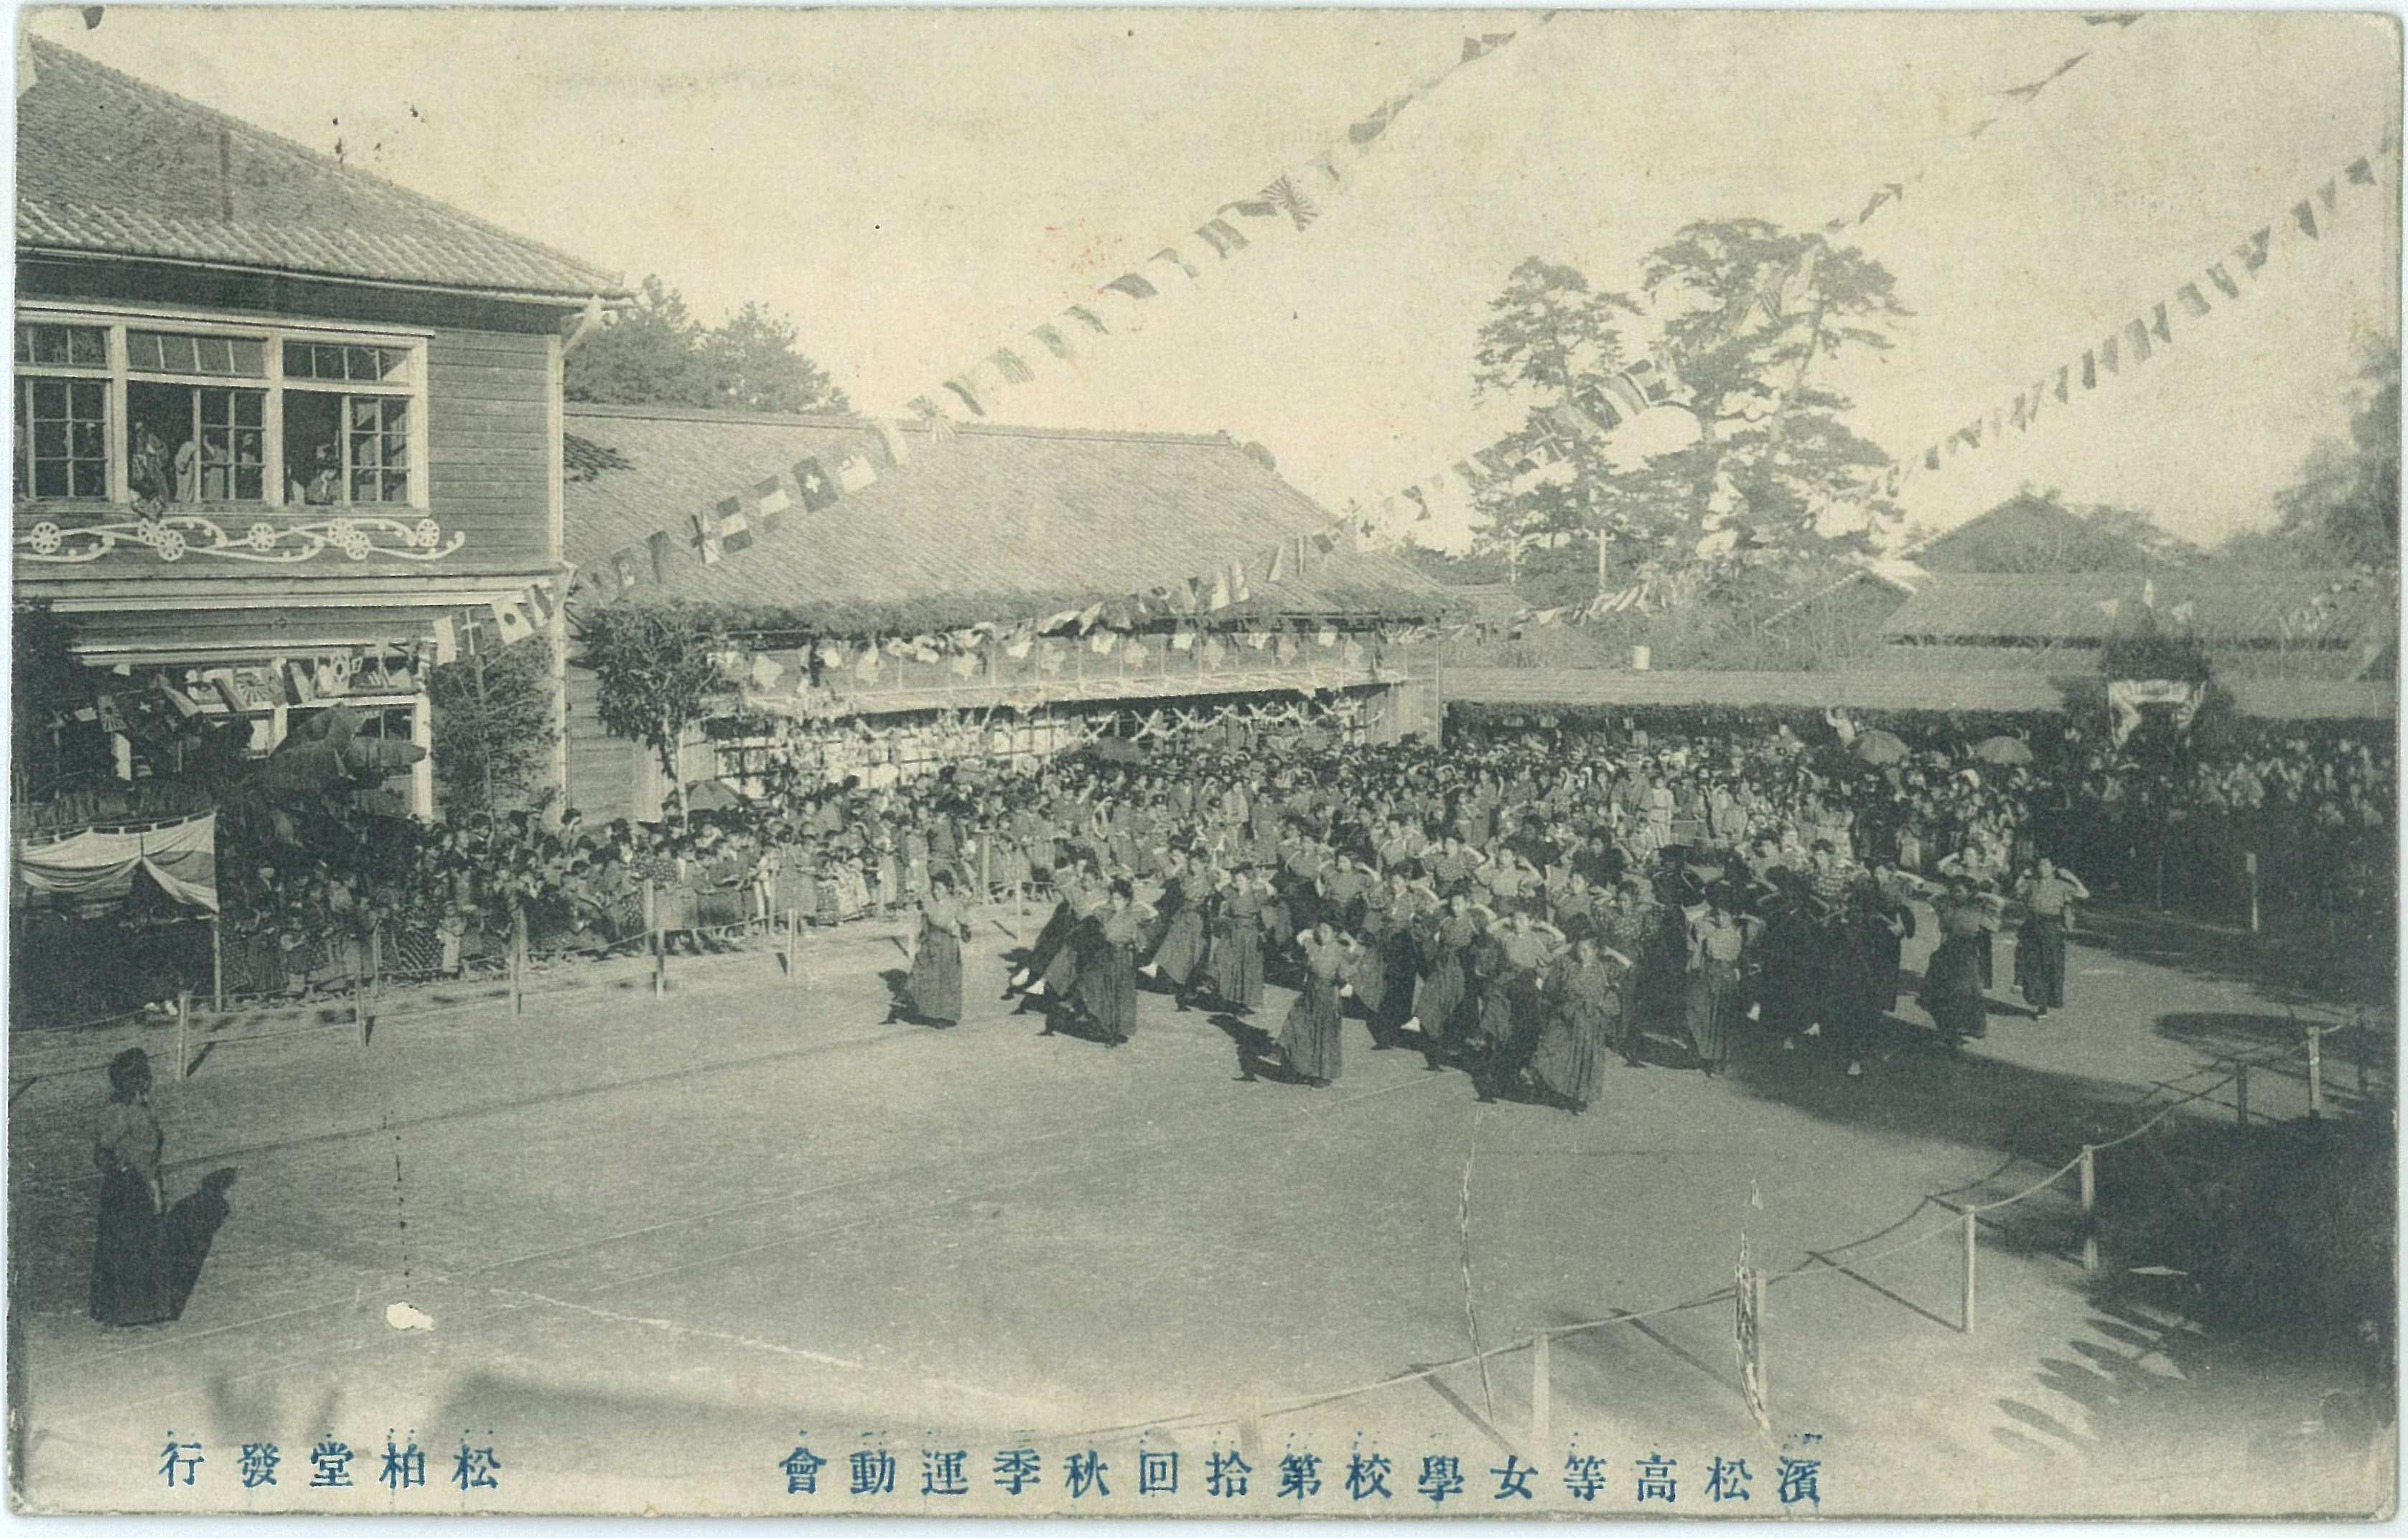 Hamamatsu GirlsHighSchool 1910 SportsDay Dance